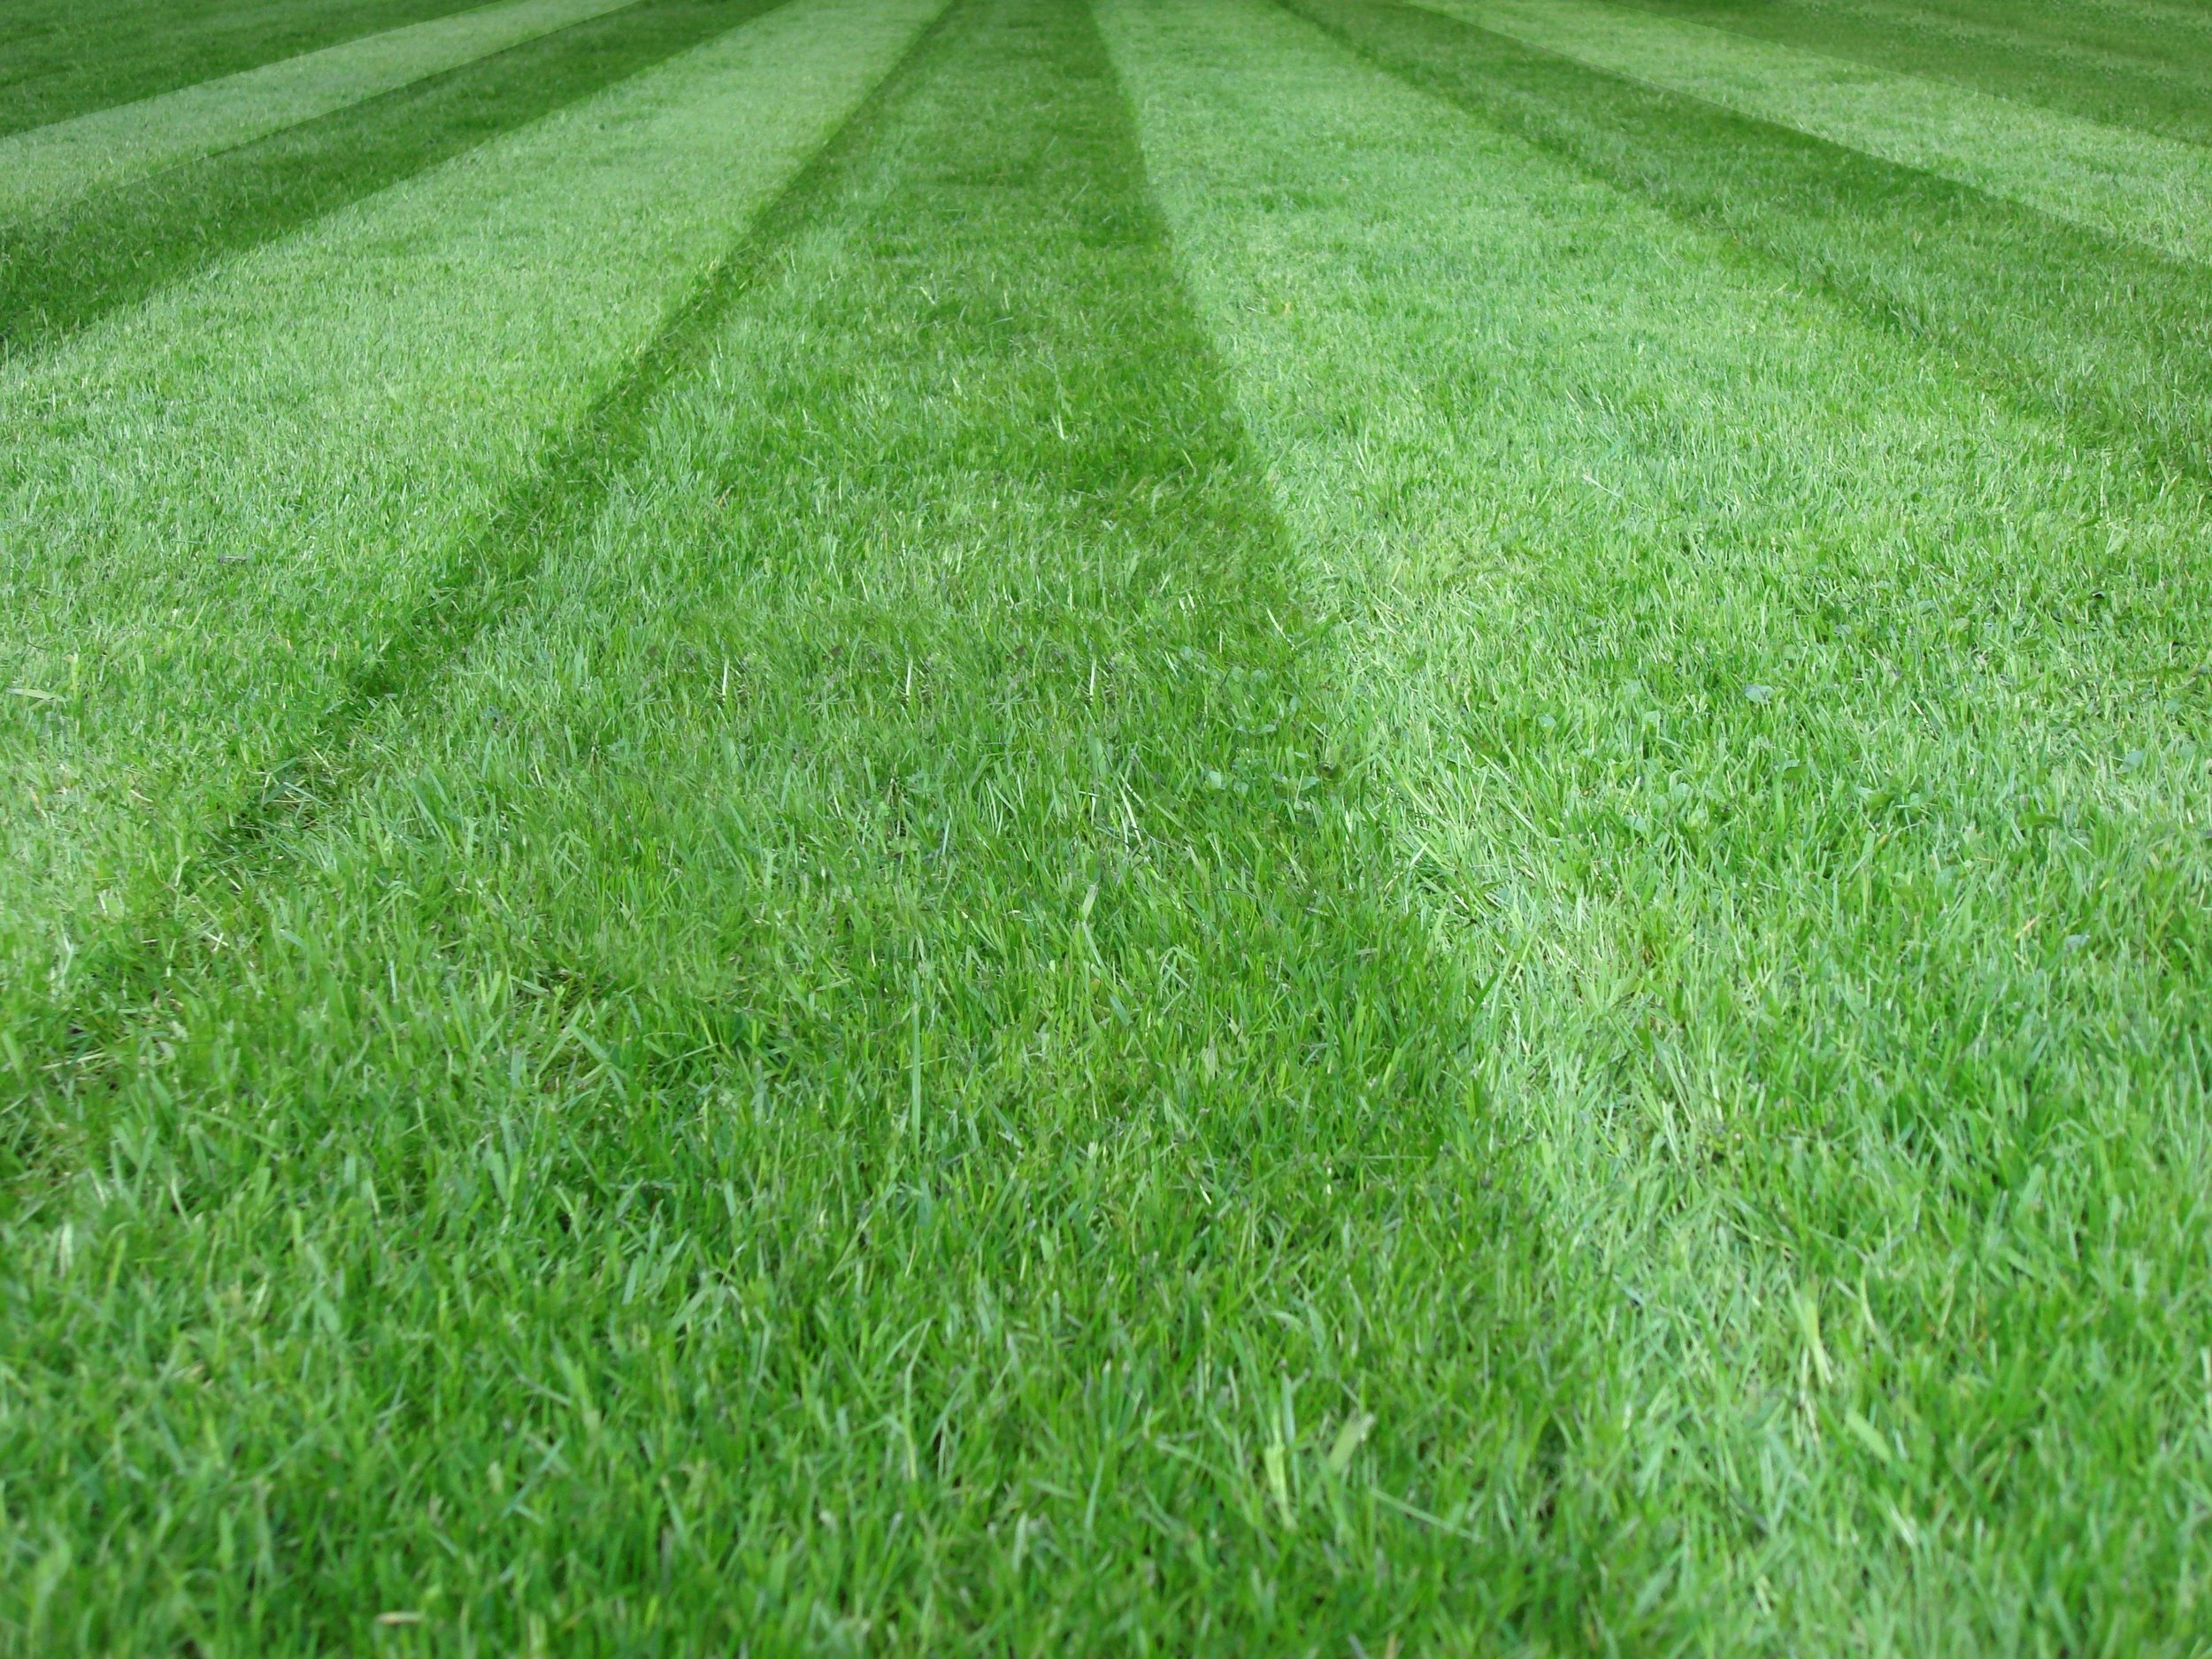 lawn mowing service green grass clean.jpeg